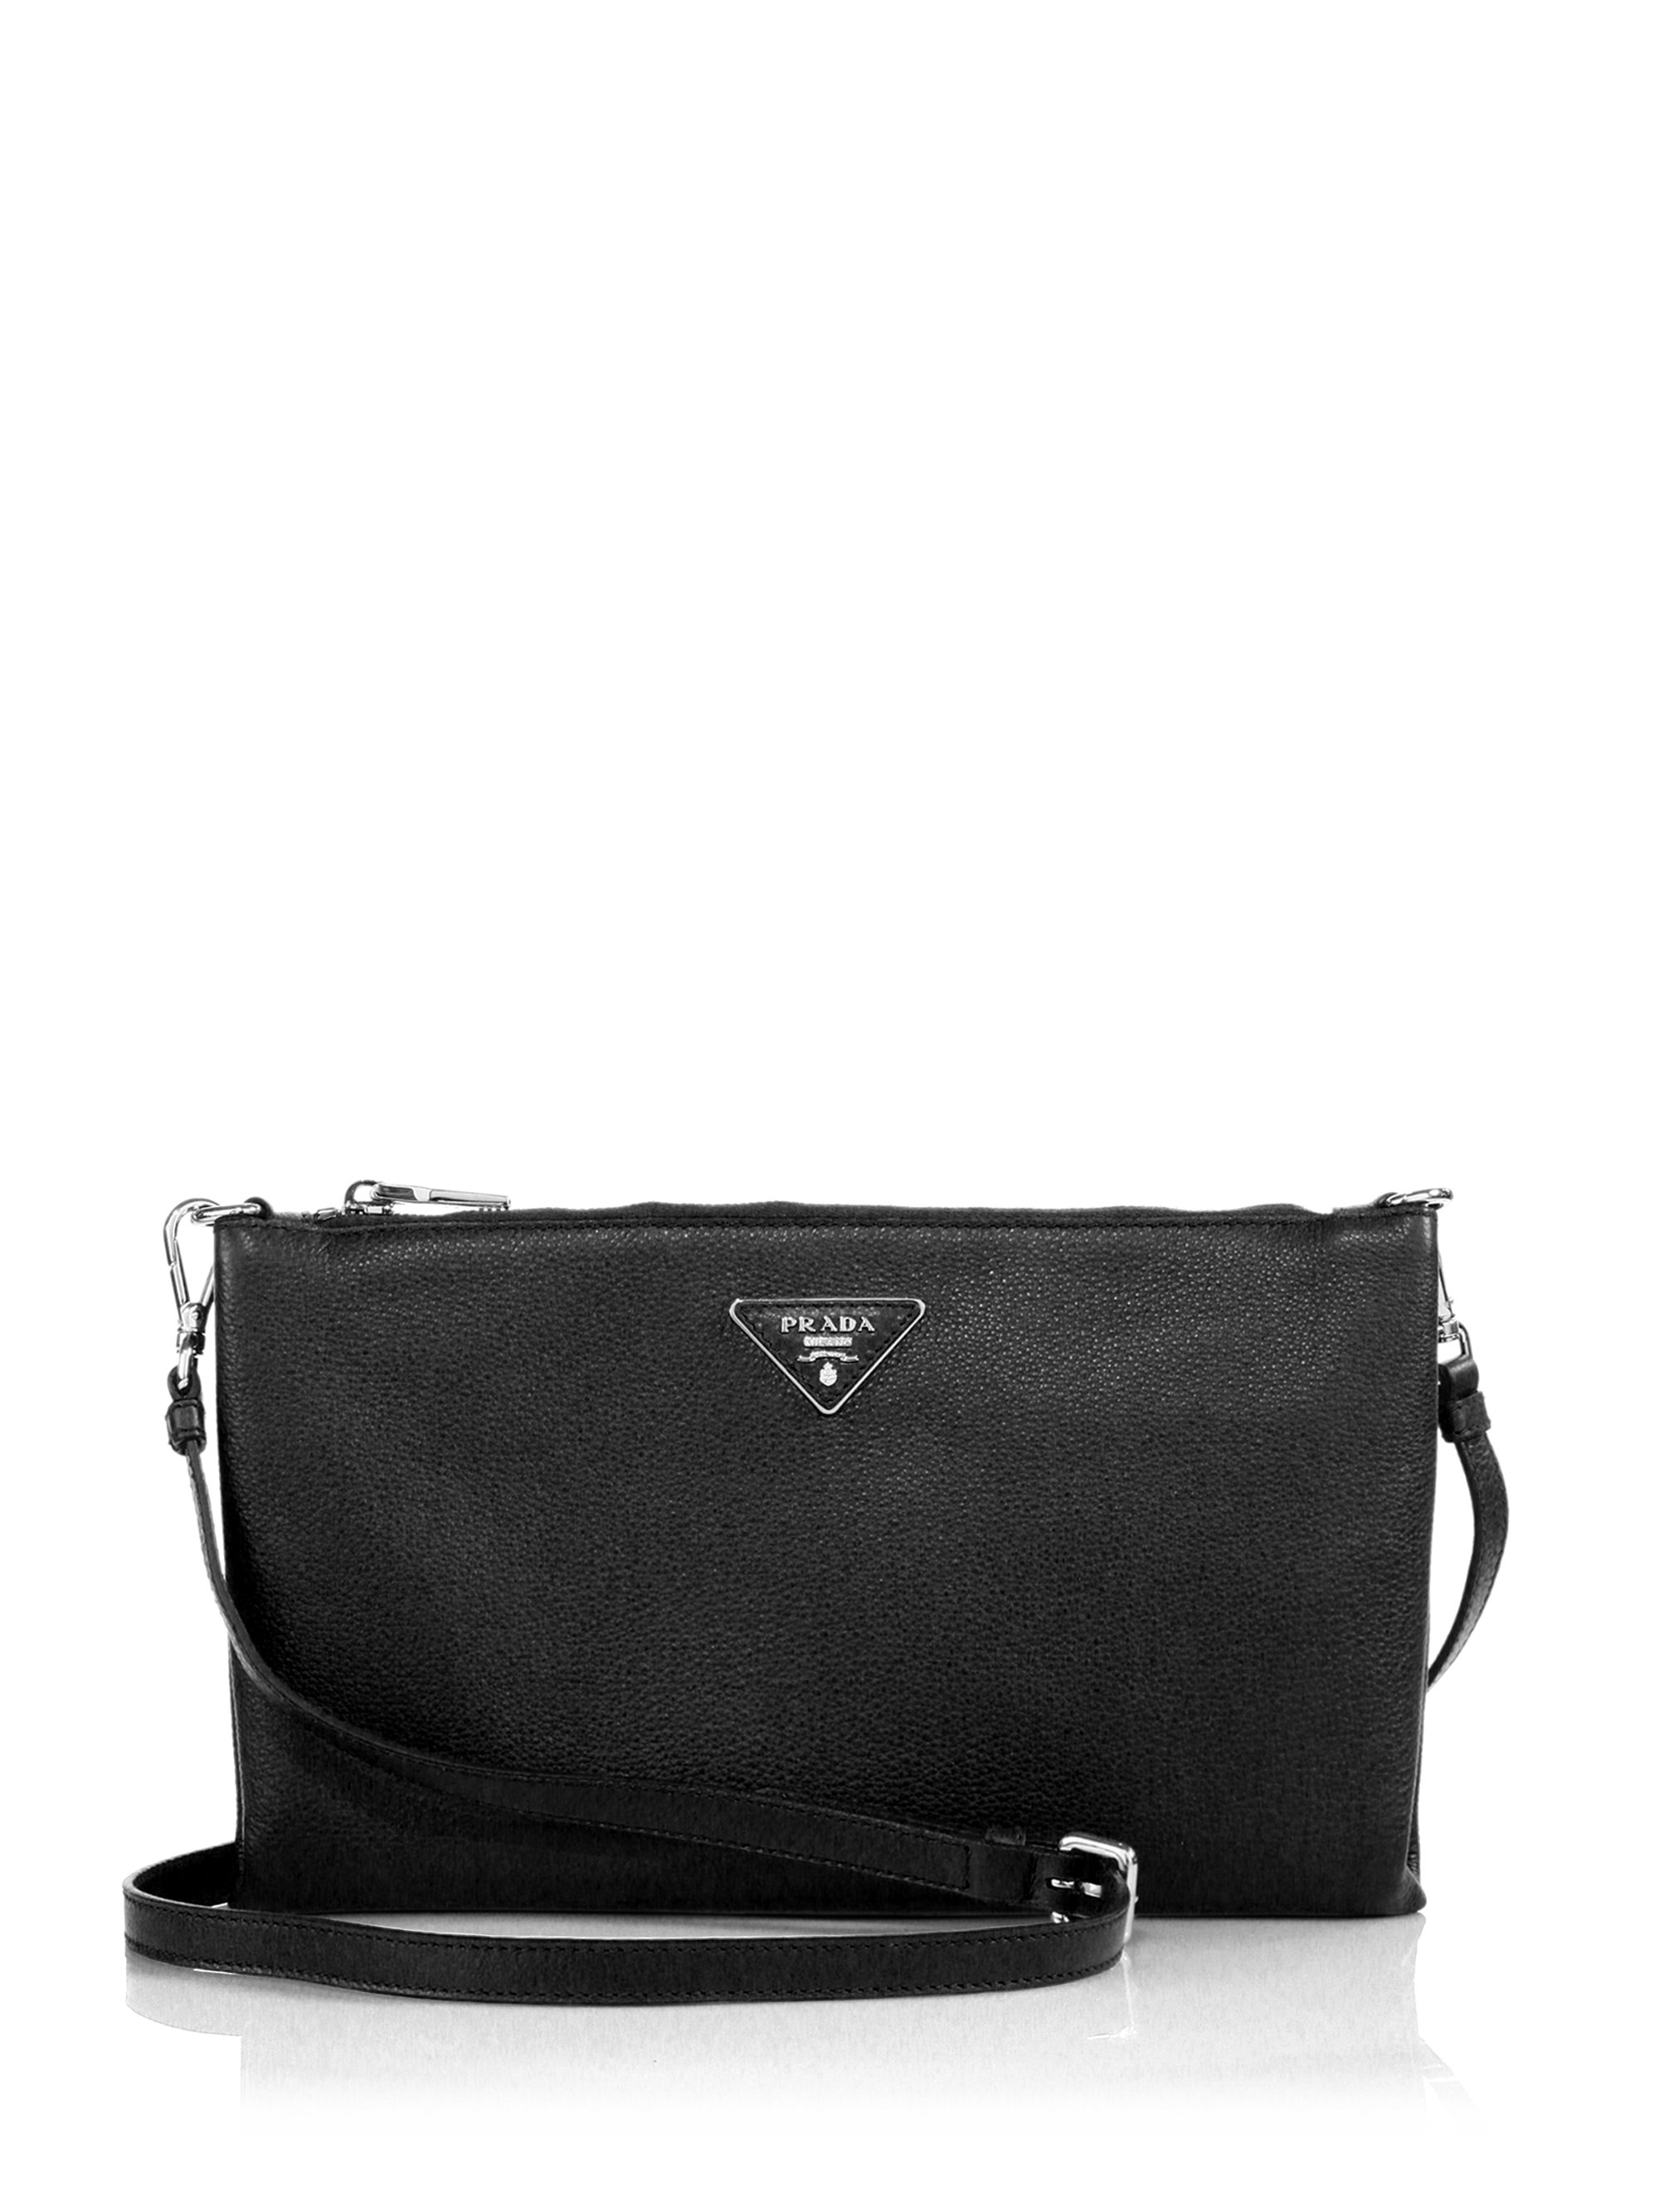 Prada Daino Crossbody Bag in Black | Lyst